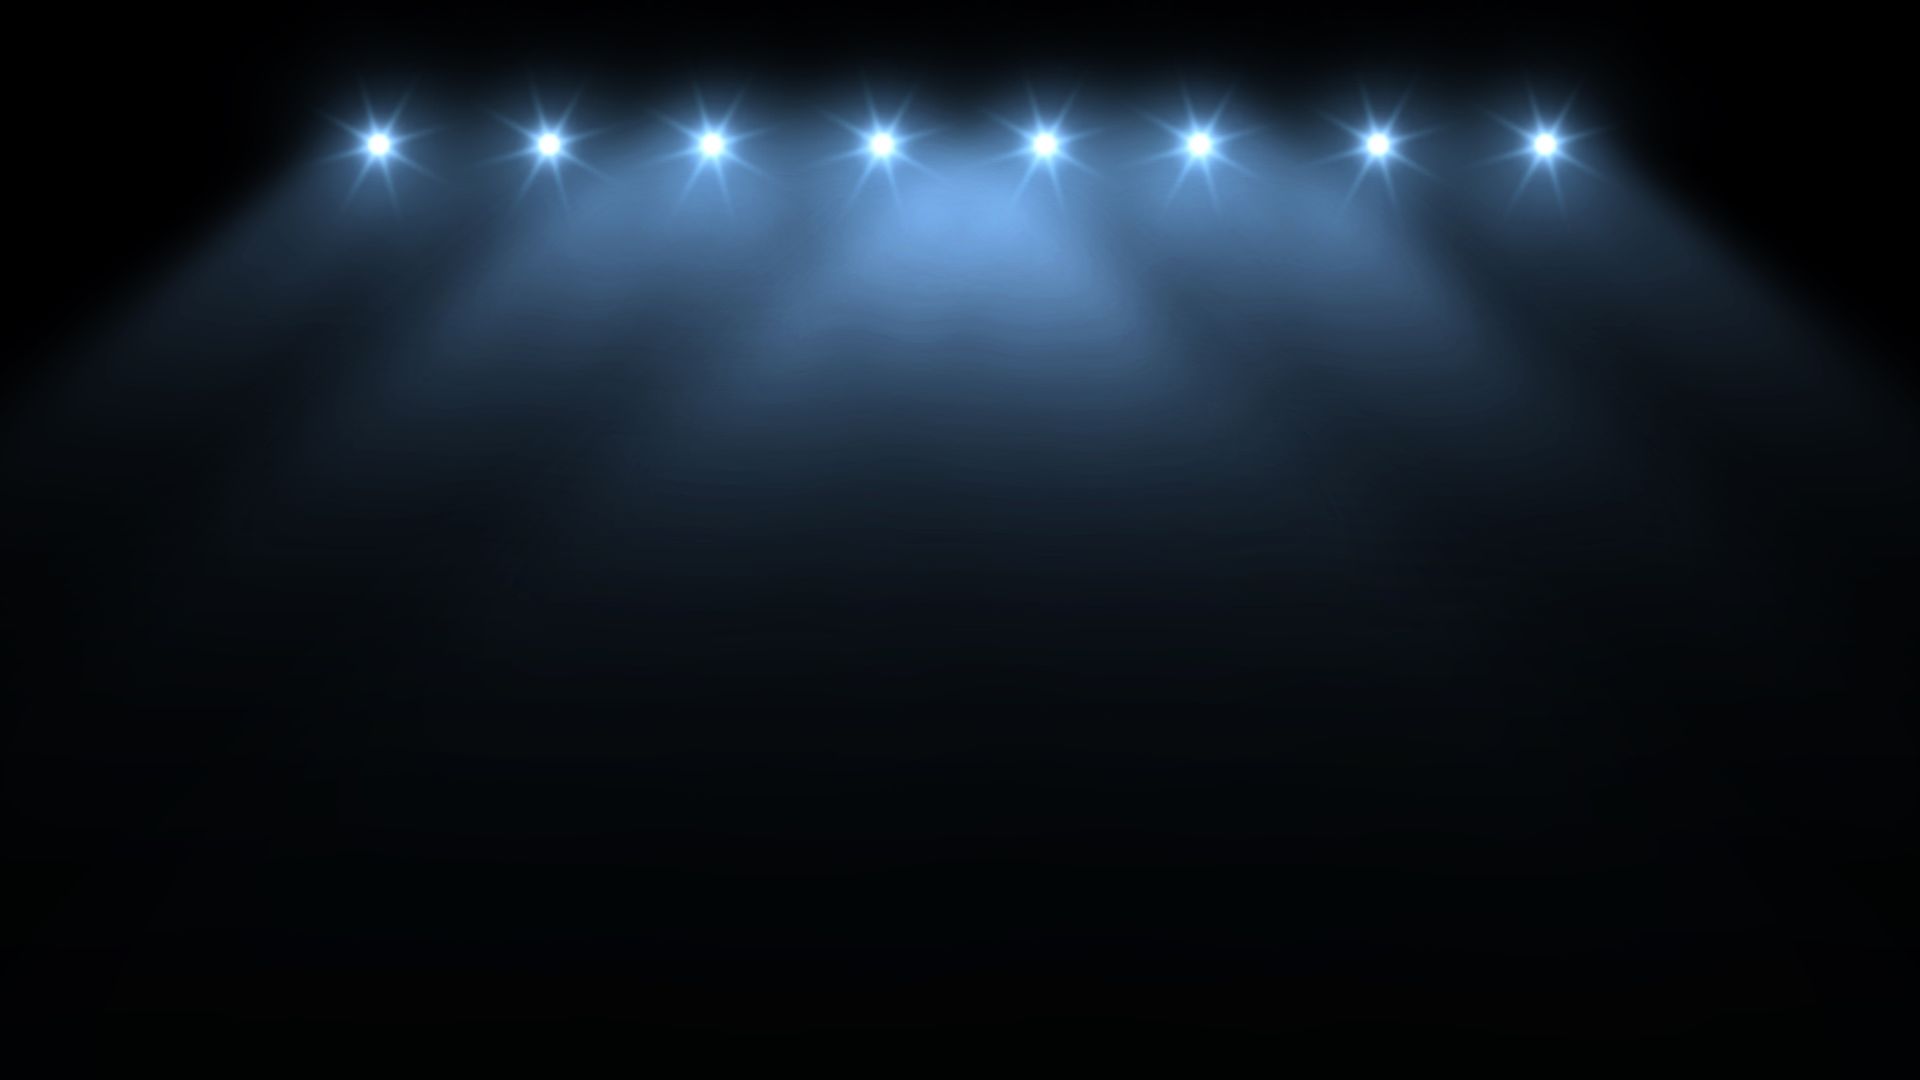 image of spotlights on dark stage